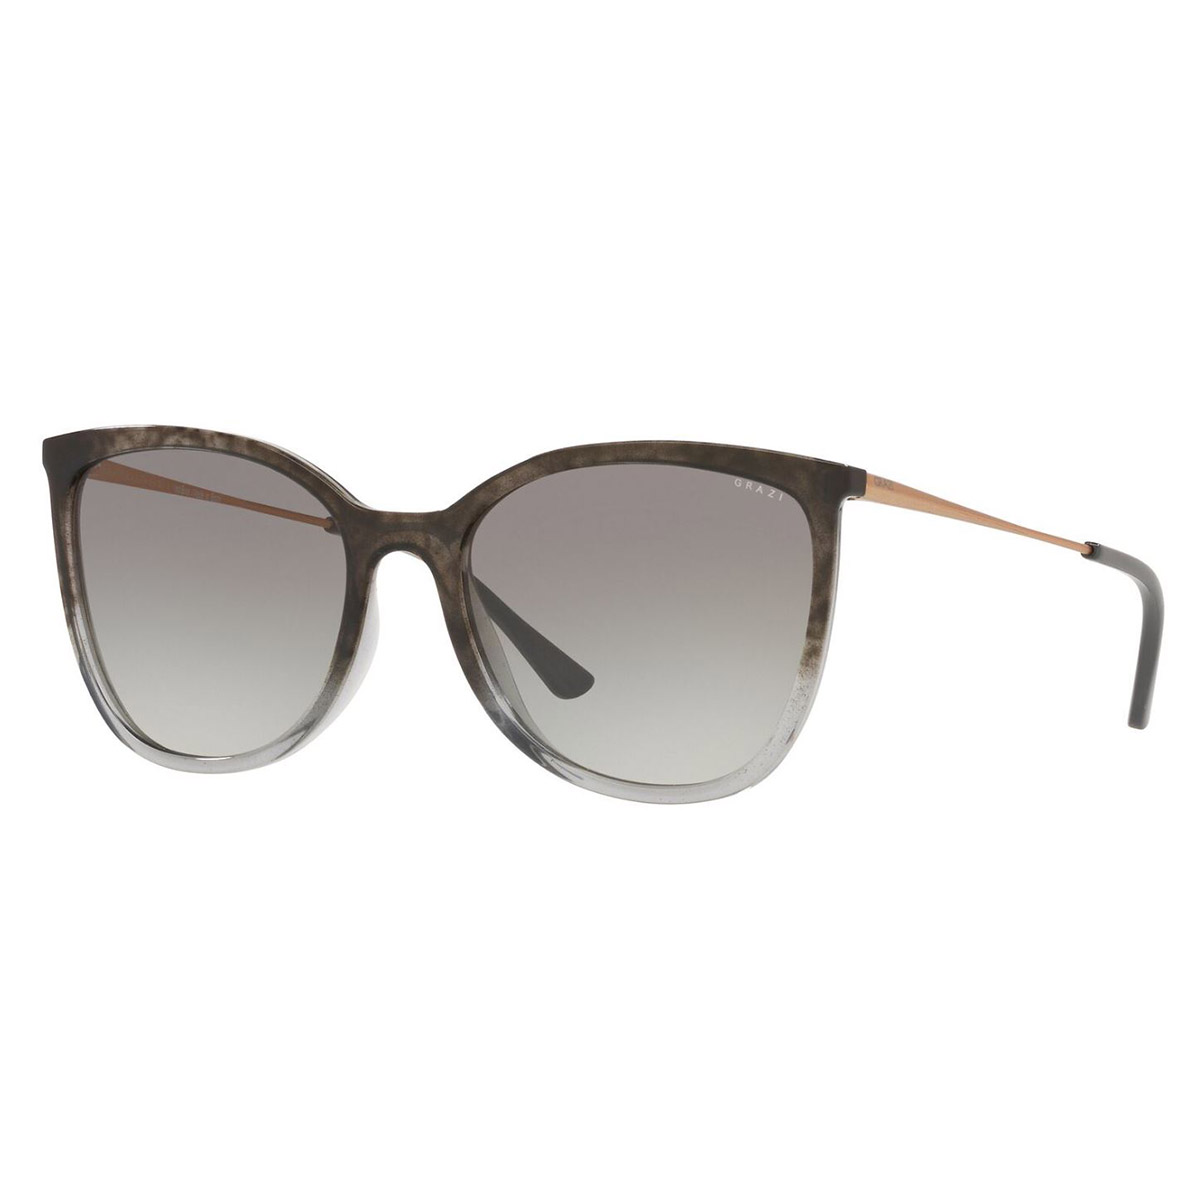 Óculos de Sol Grazi Massafera GZ4046 Cinza Translúcido com Preto